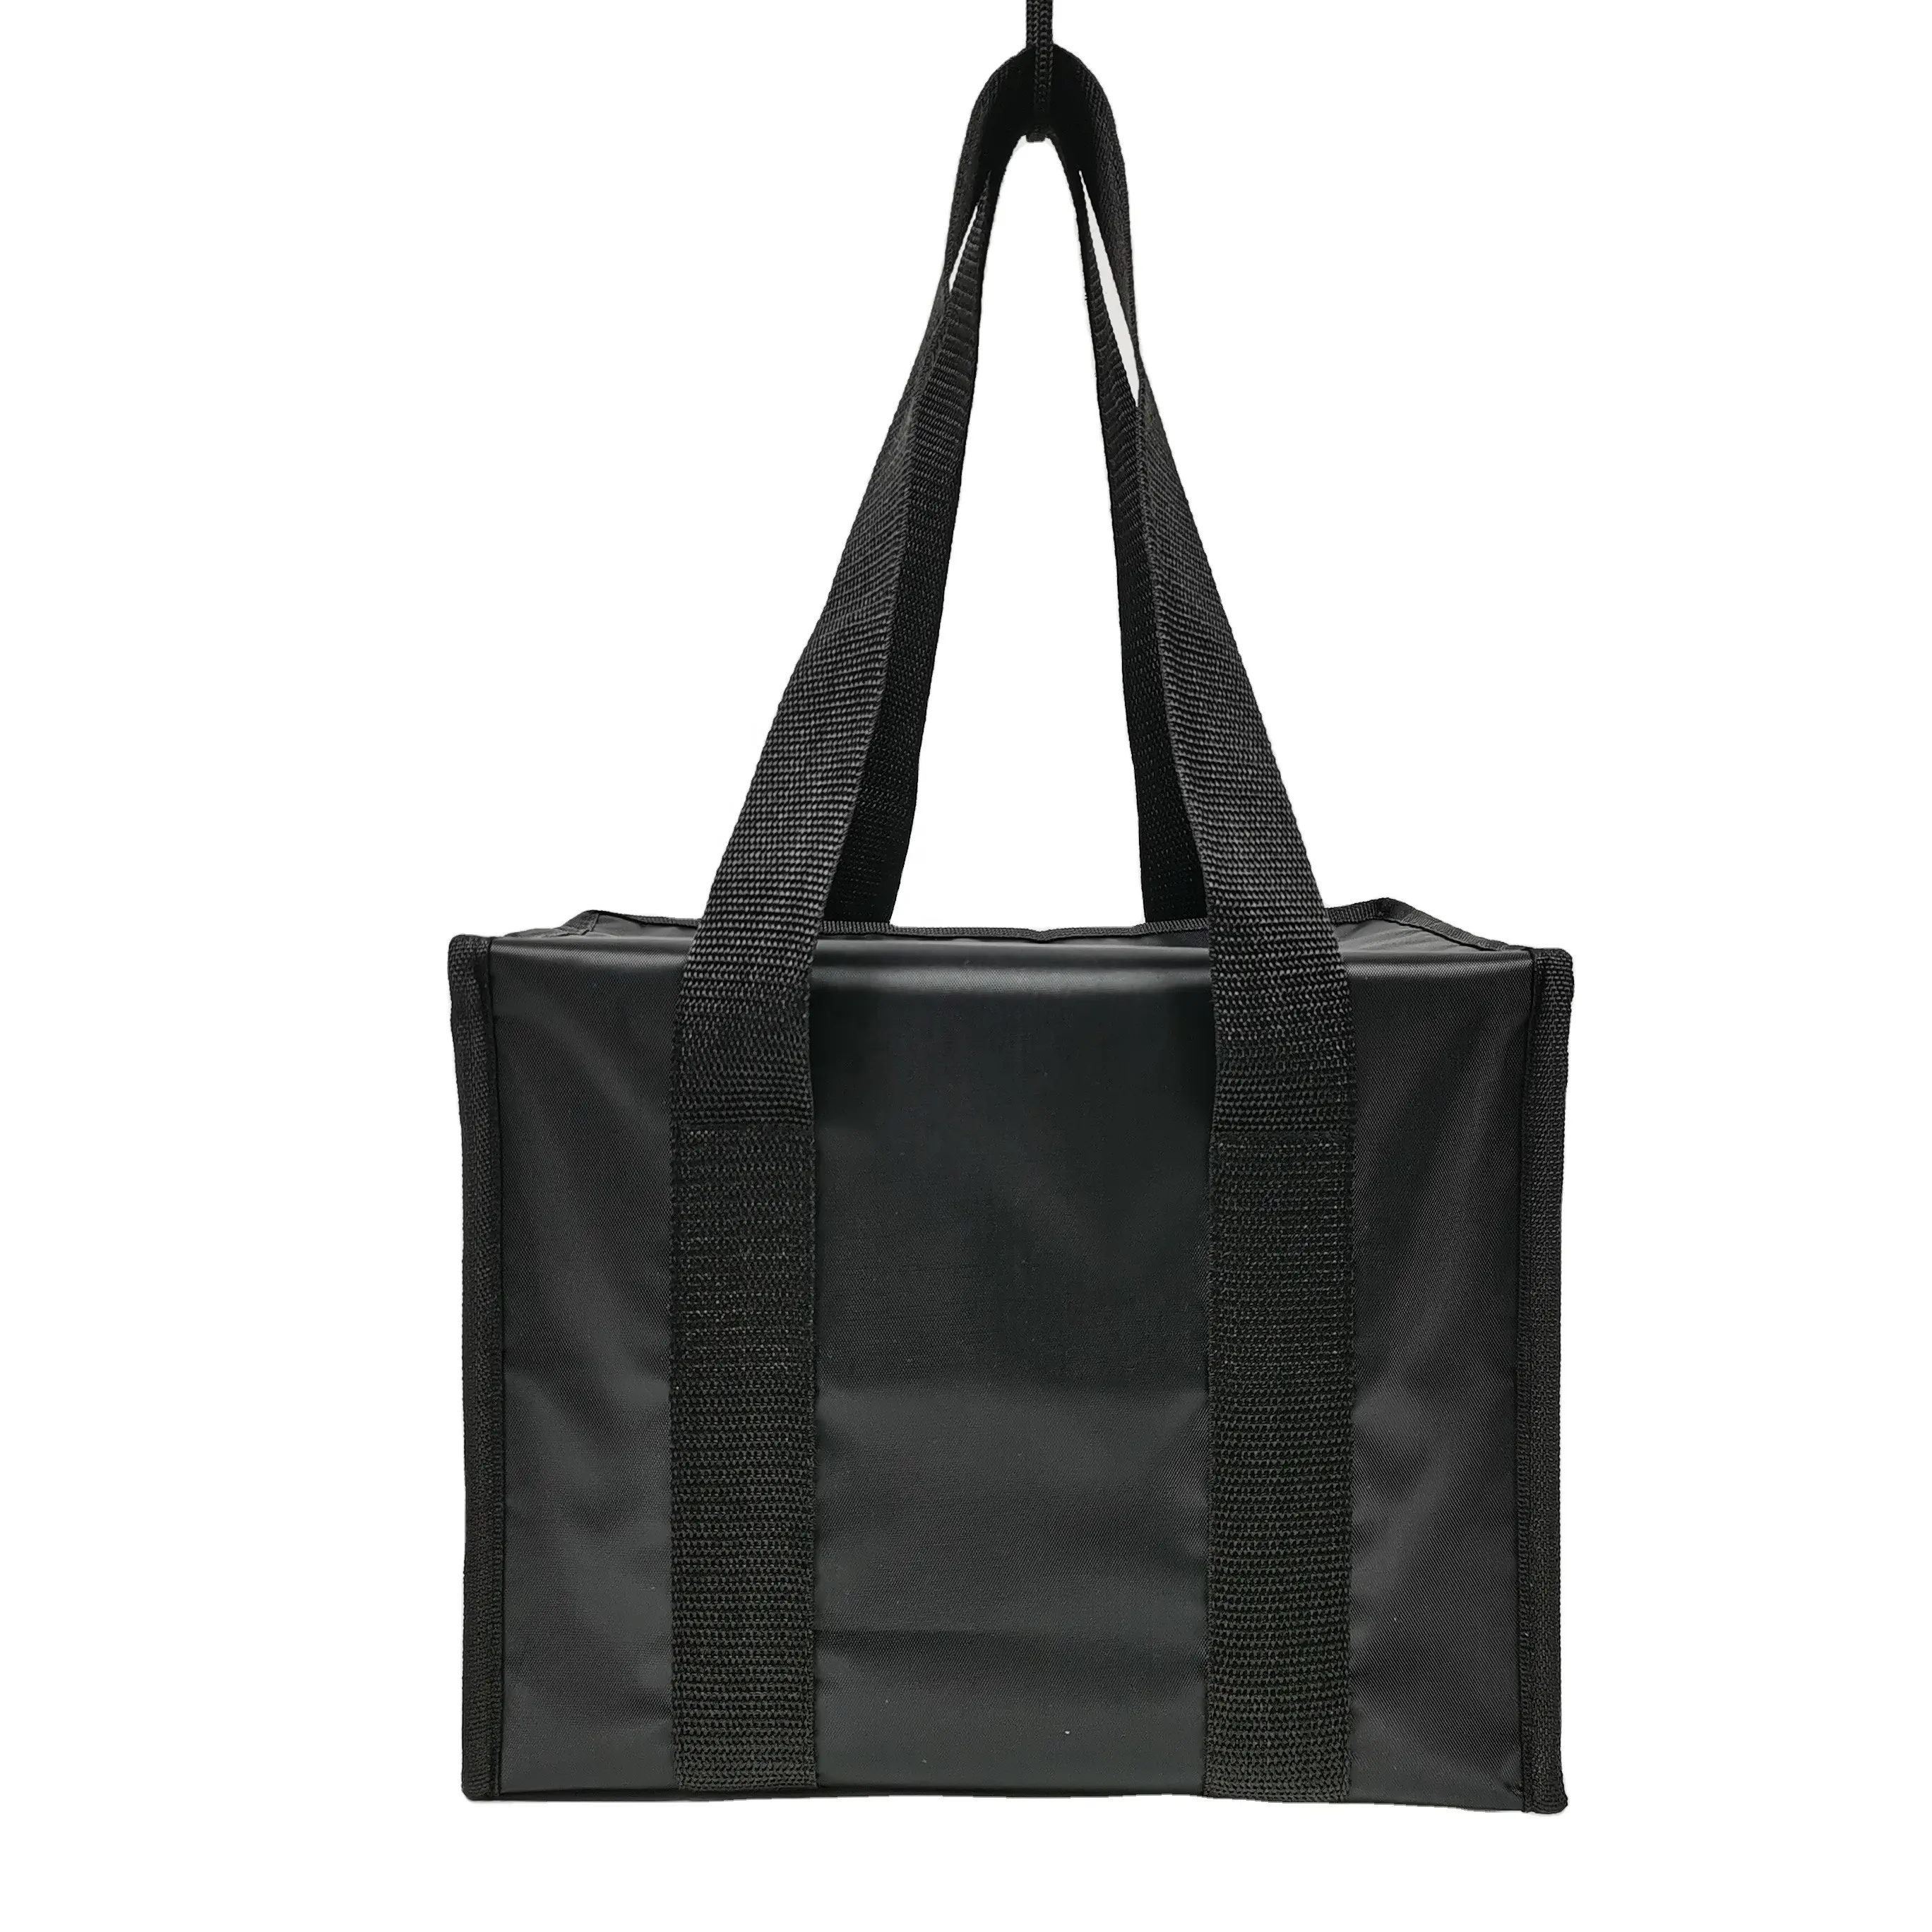 Saco cooler grande macio isolado preto, praia delicado aparência, sacola de sacola cooler, bom preço, personalizado